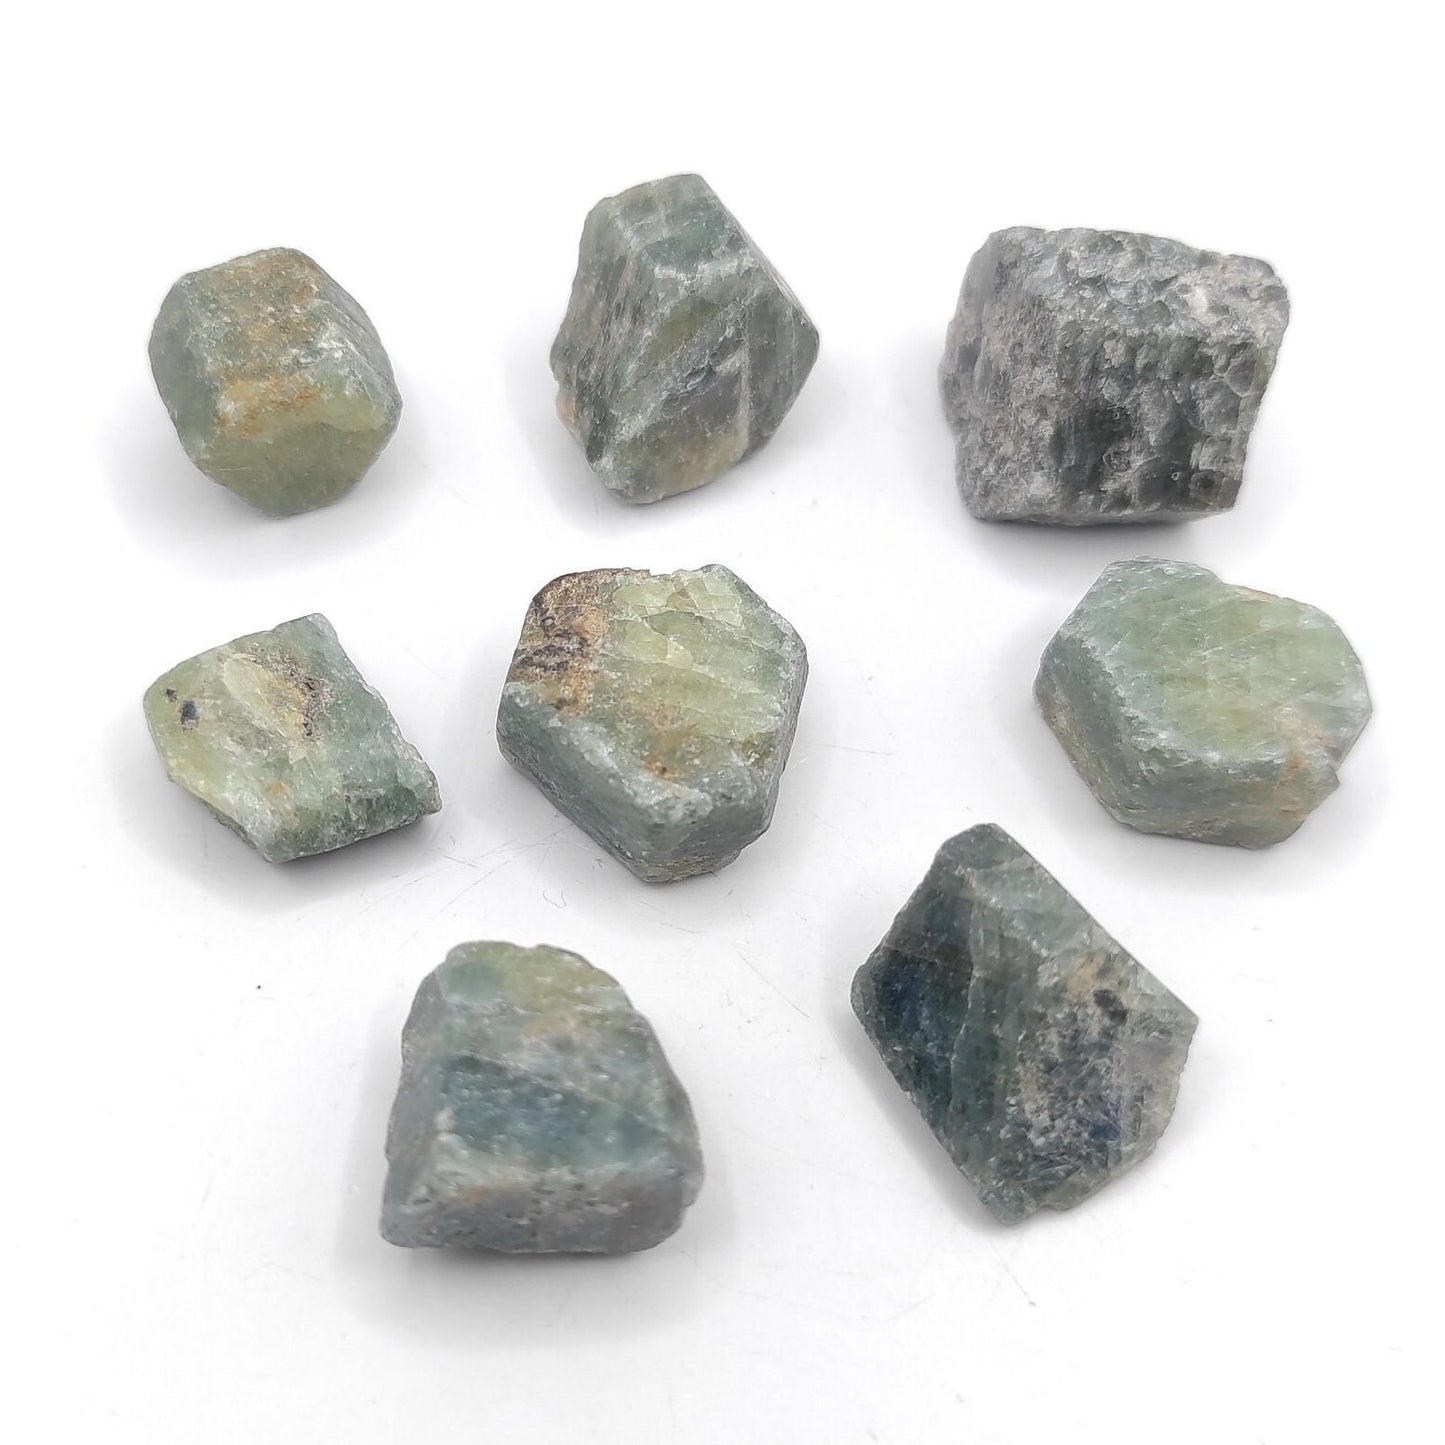 215ct Rough Sapphire Lot - Untreated & Unheated Sapphires - Rough Blue Corundum Gems from Madagascar - Raw Sapphire Gemstones - Rough Gems